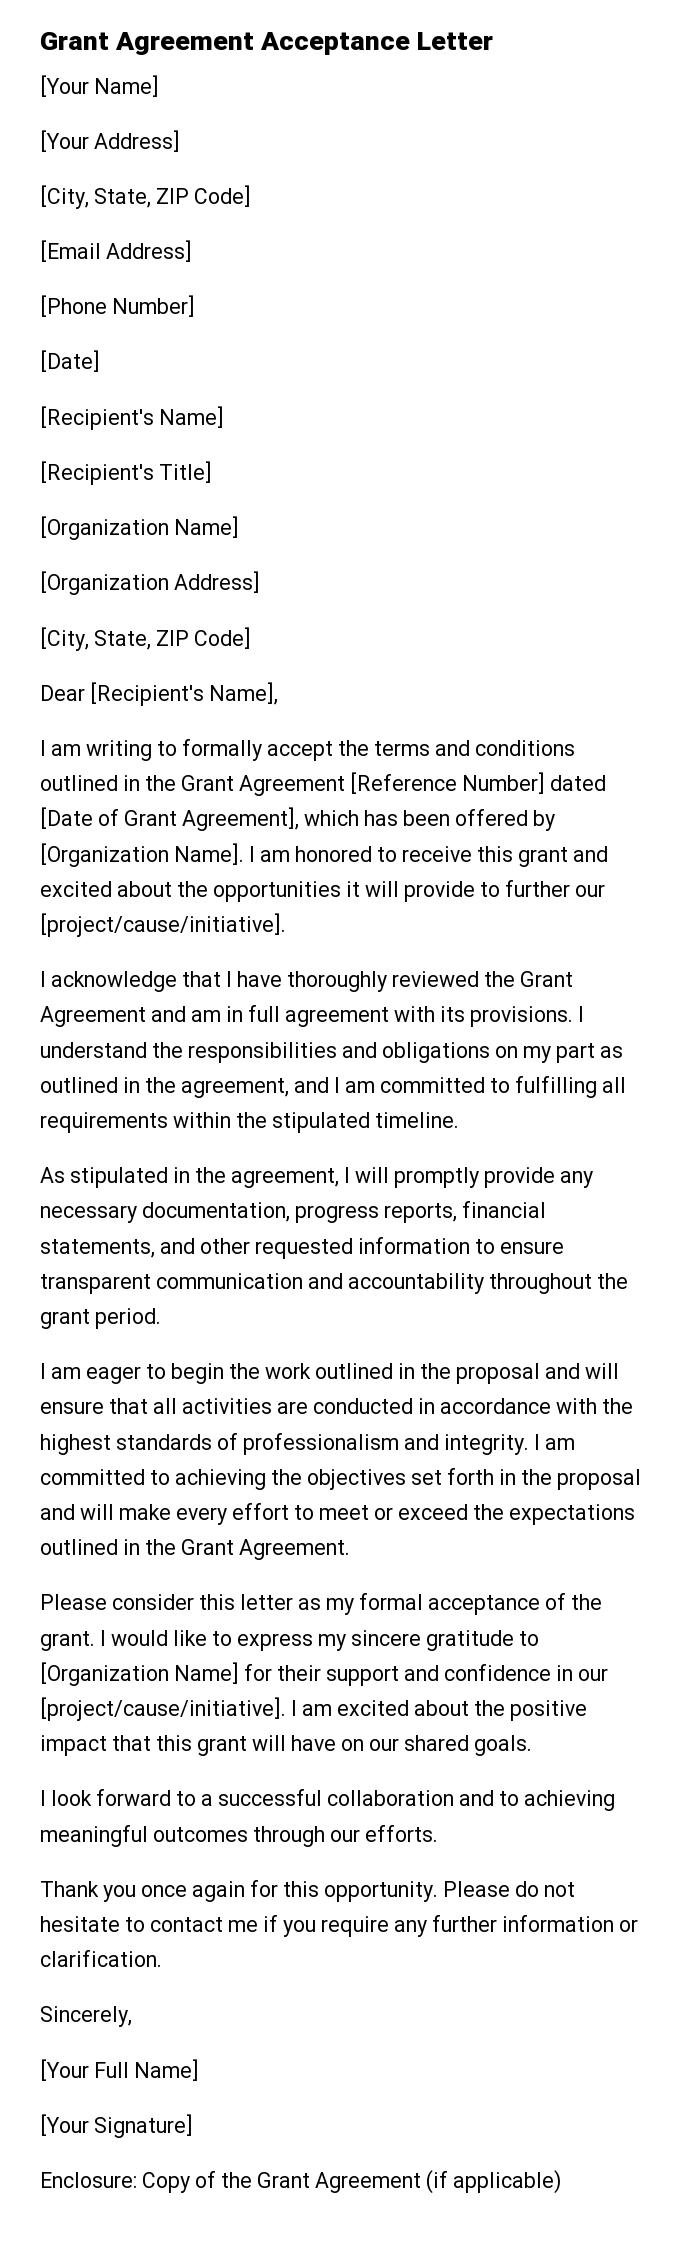 Grant Agreement Acceptance Letter